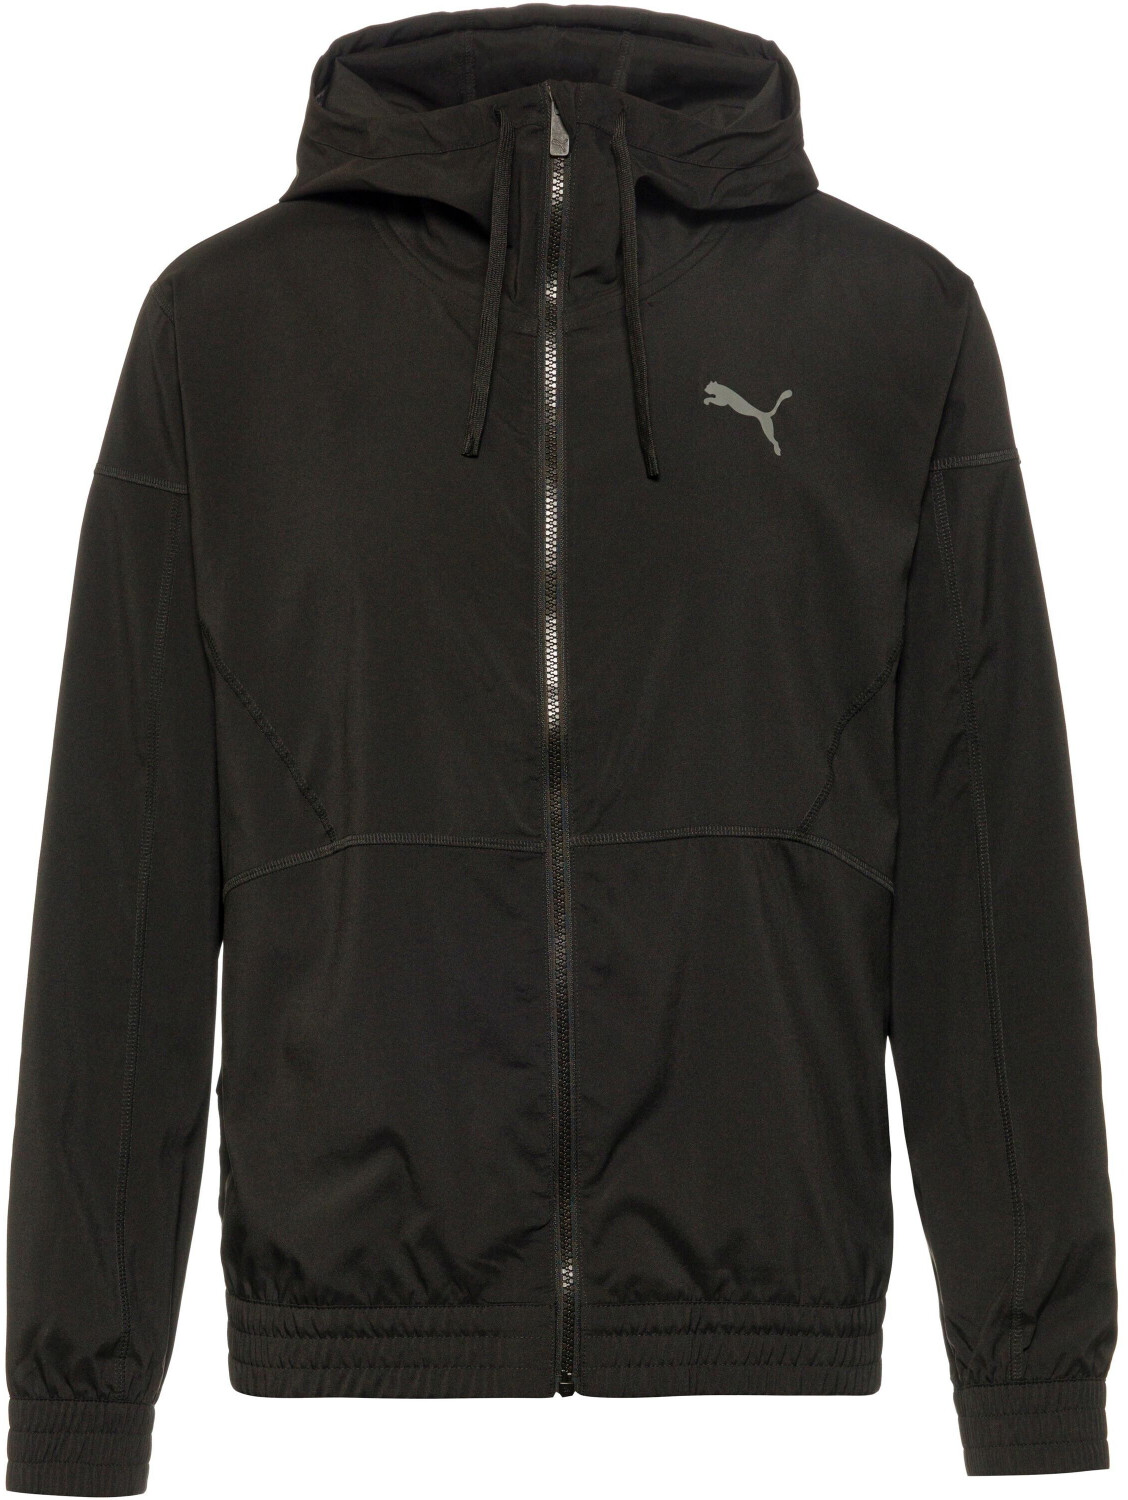 Puma Fit Men\'s Training Jacket ab bei 34,00 | dark € gray (522128) puma black/cool Preisvergleich